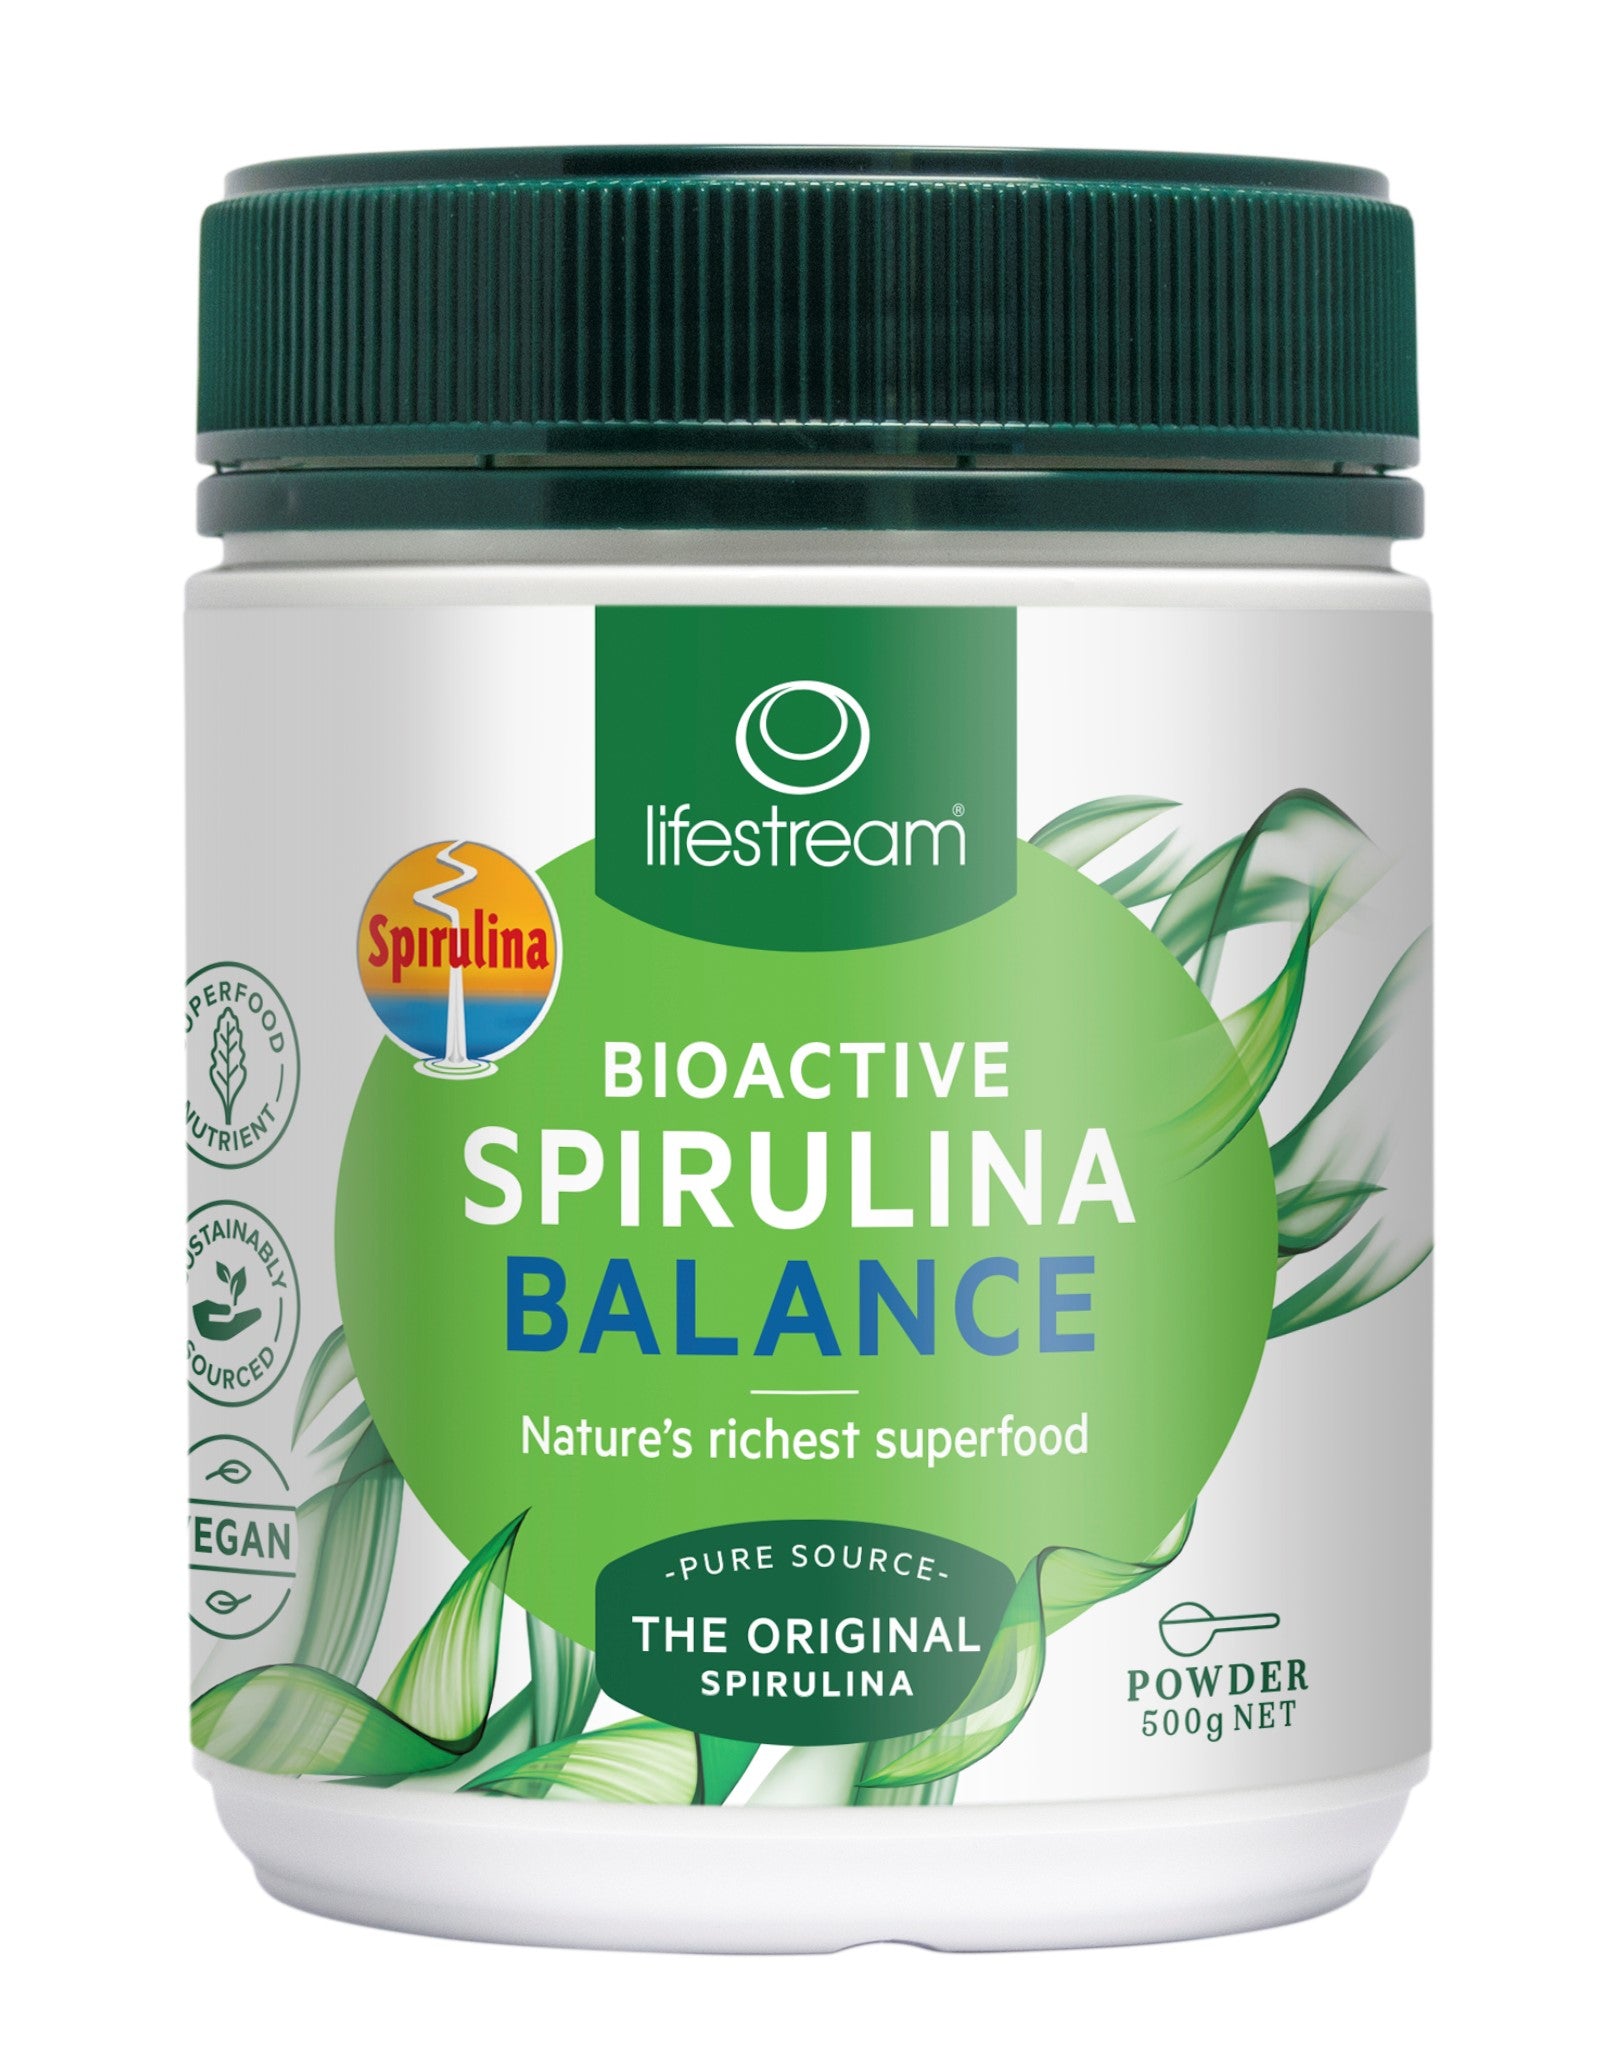 Lifestream Bioactive Spirulina Balance Powder 500g New